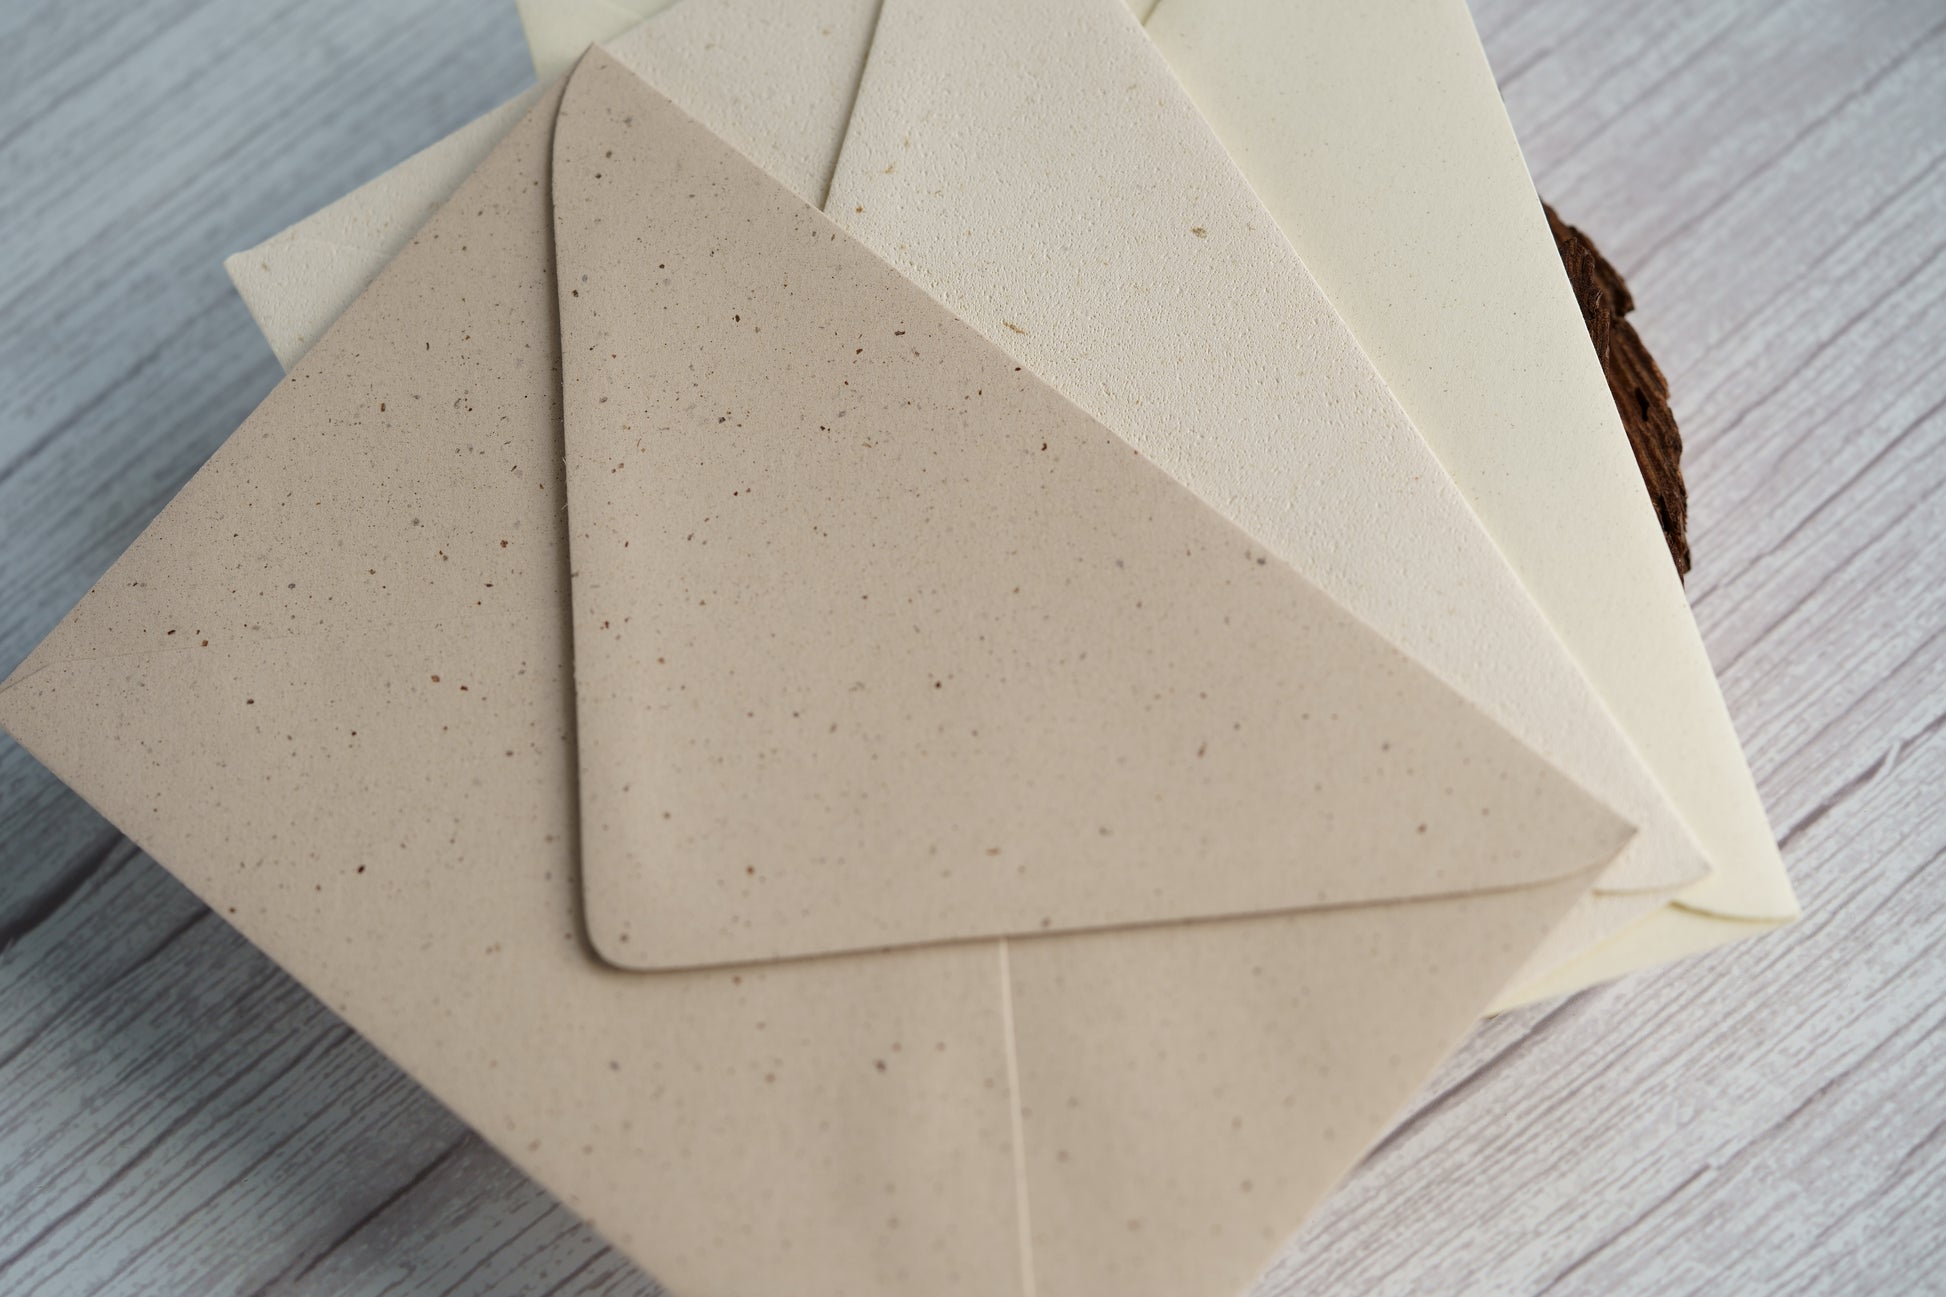 envelopes-reciclados-ecologicos-convites